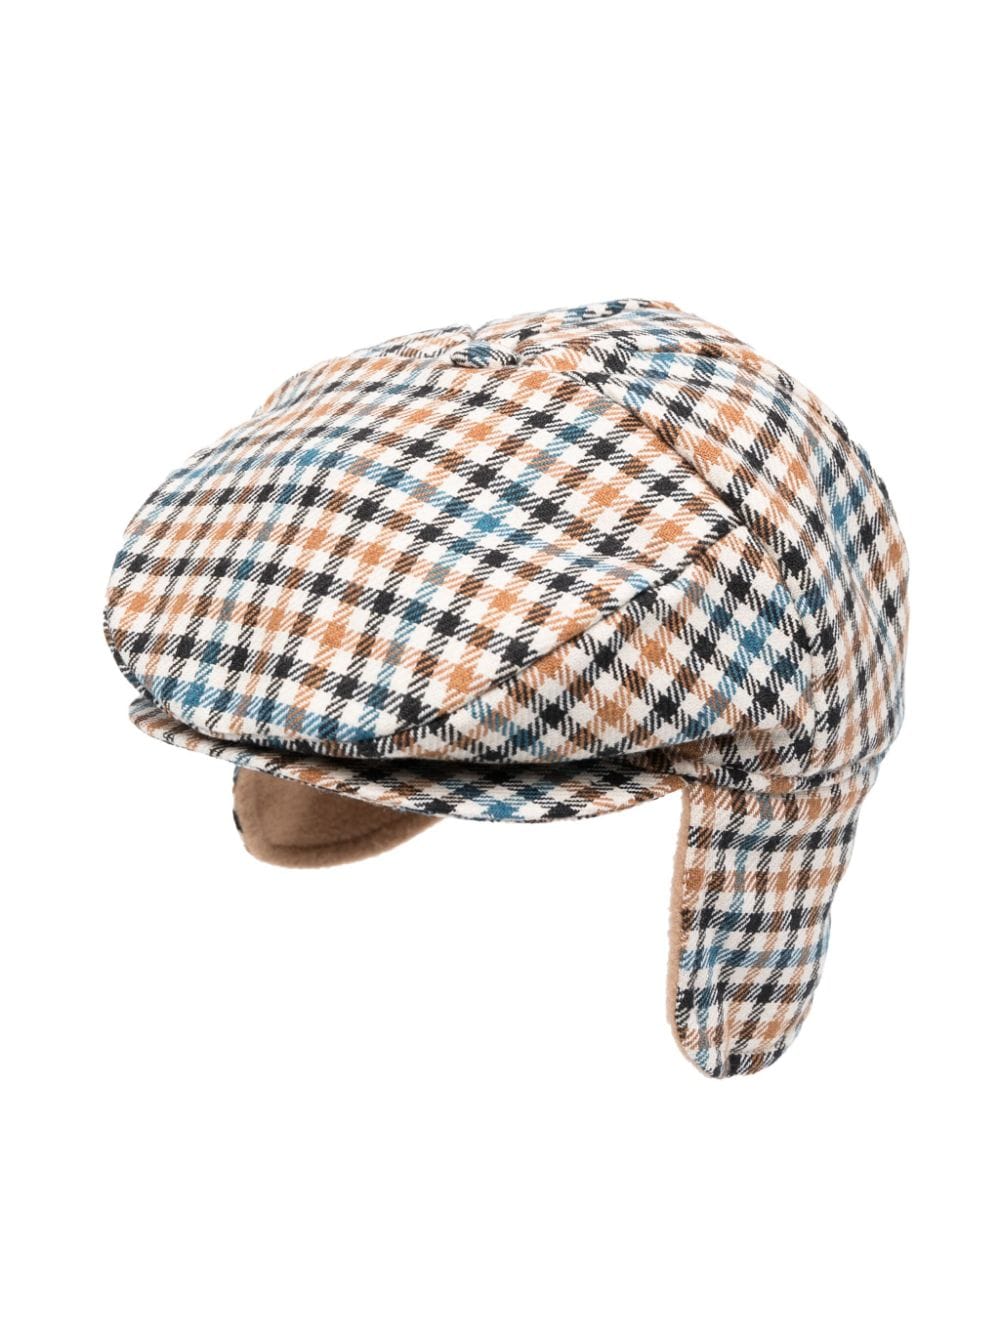 Checkered hat